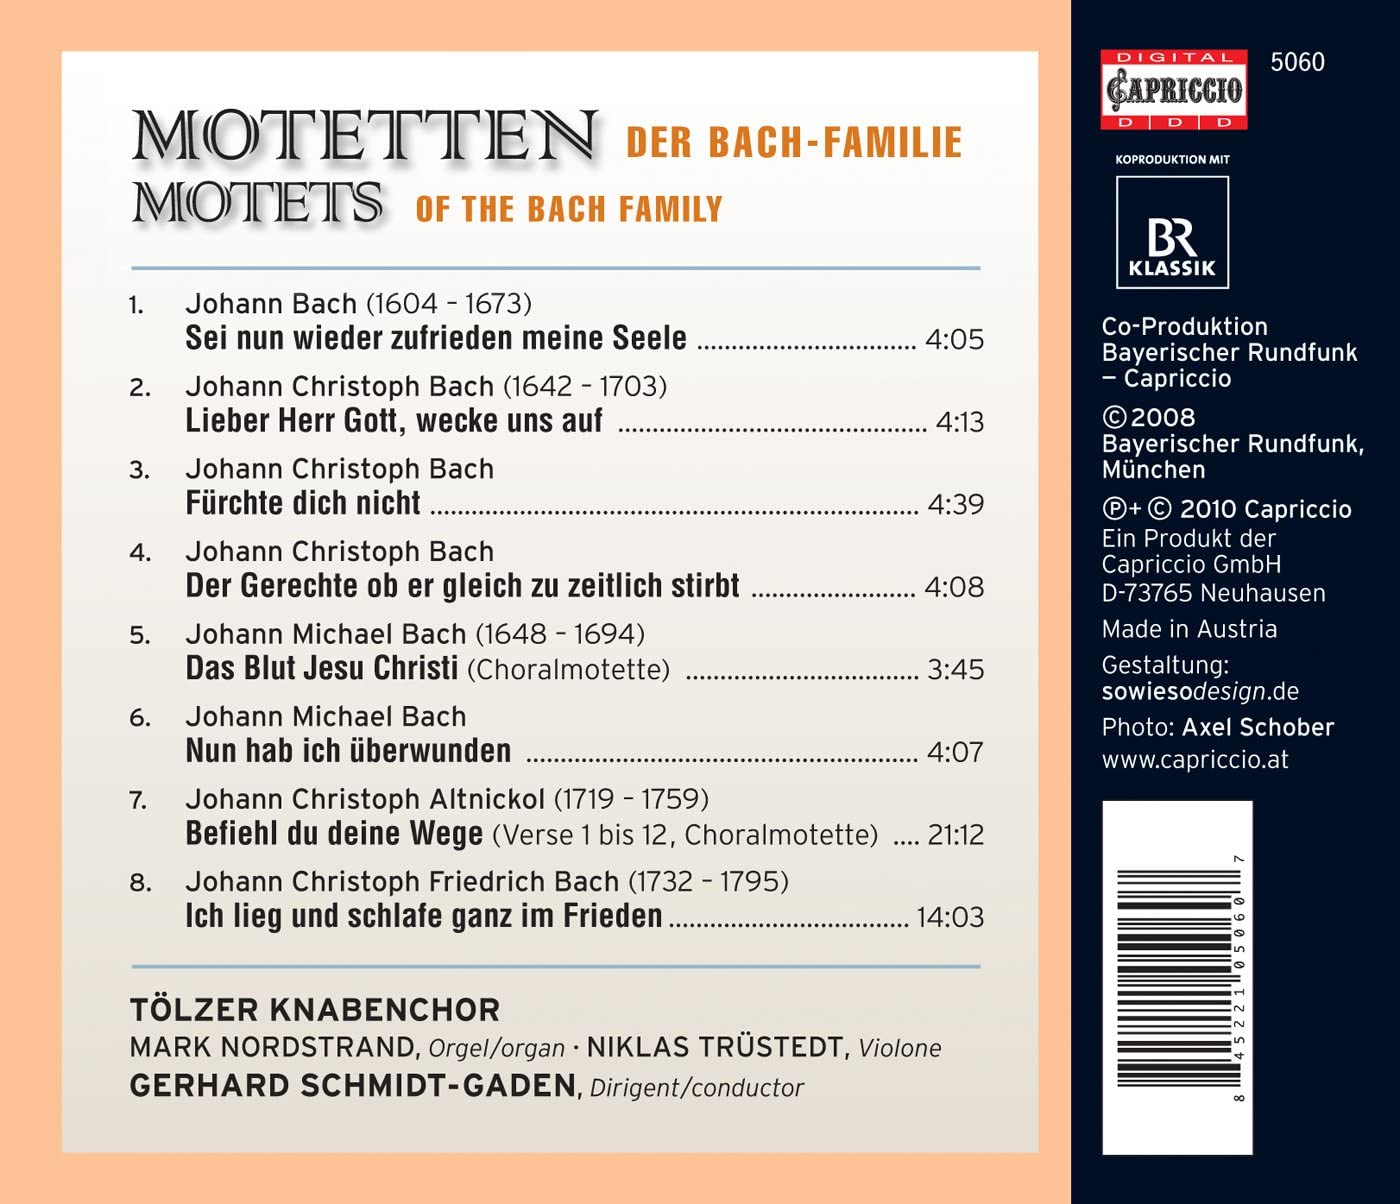 Motets of the Bach Family - slide-1